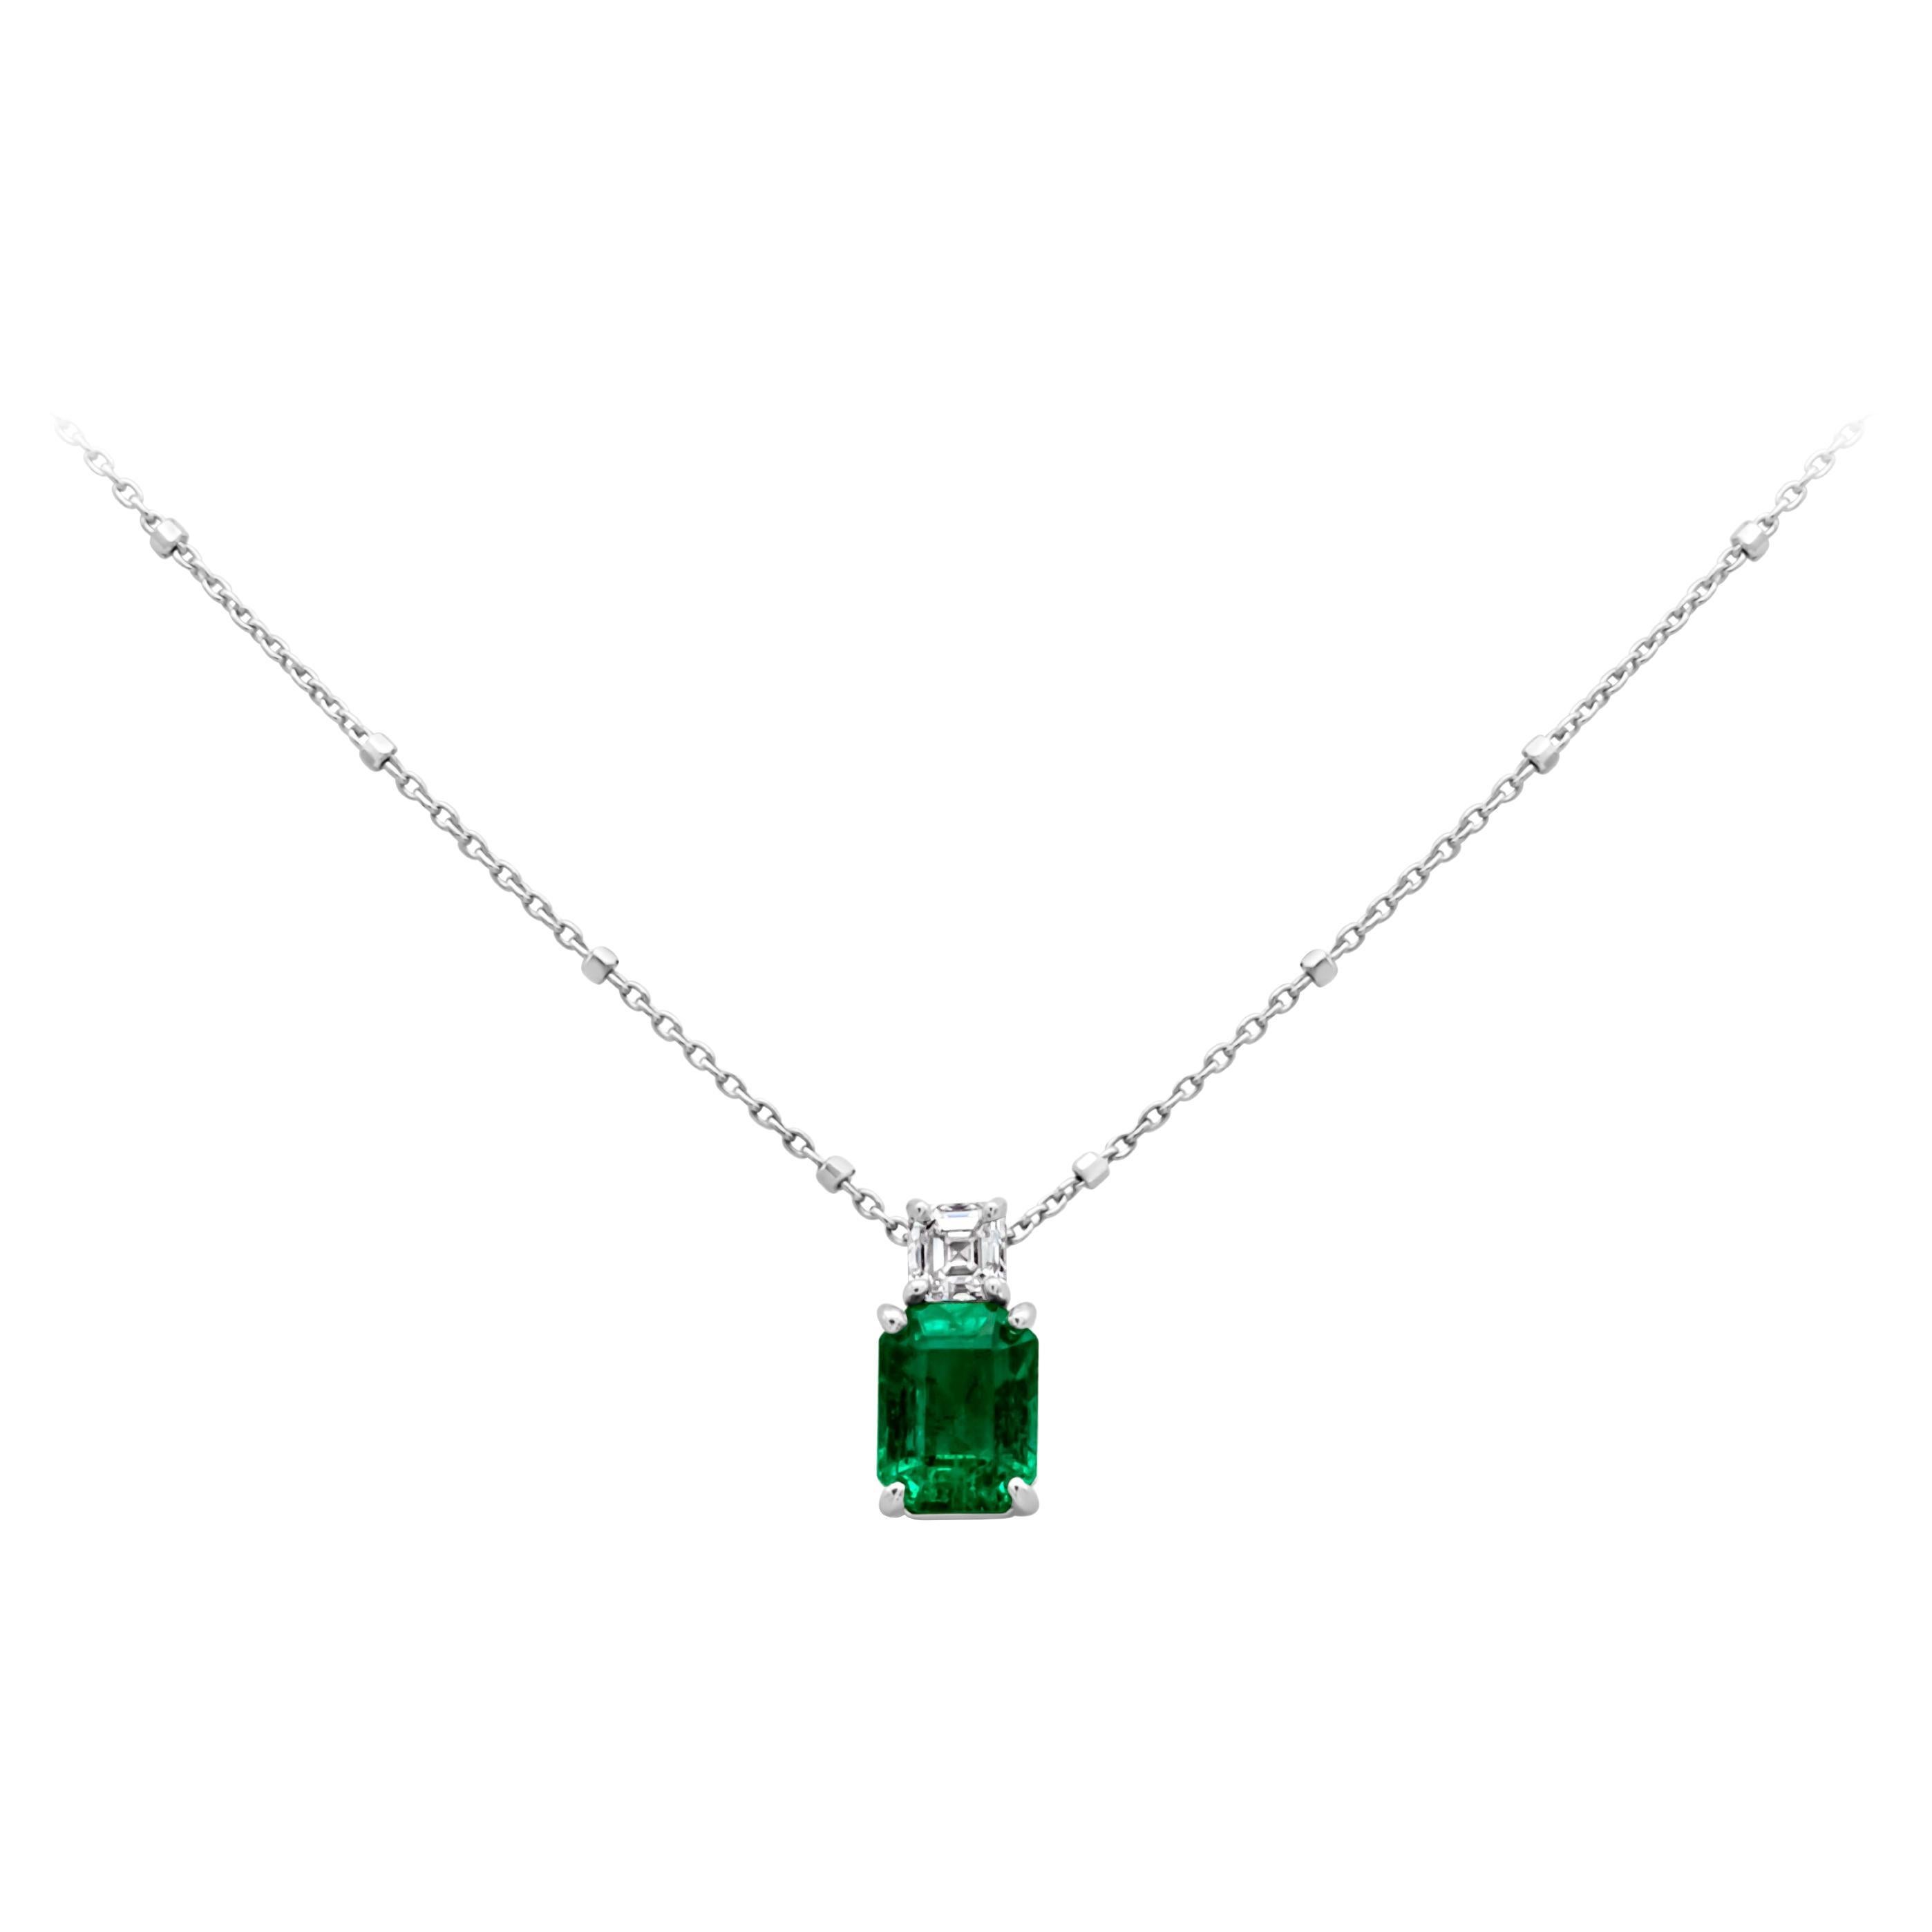 Roman Malakov 1.27 Carat Emerald Cut Green Emerald and Diamond Pendant Necklace For Sale